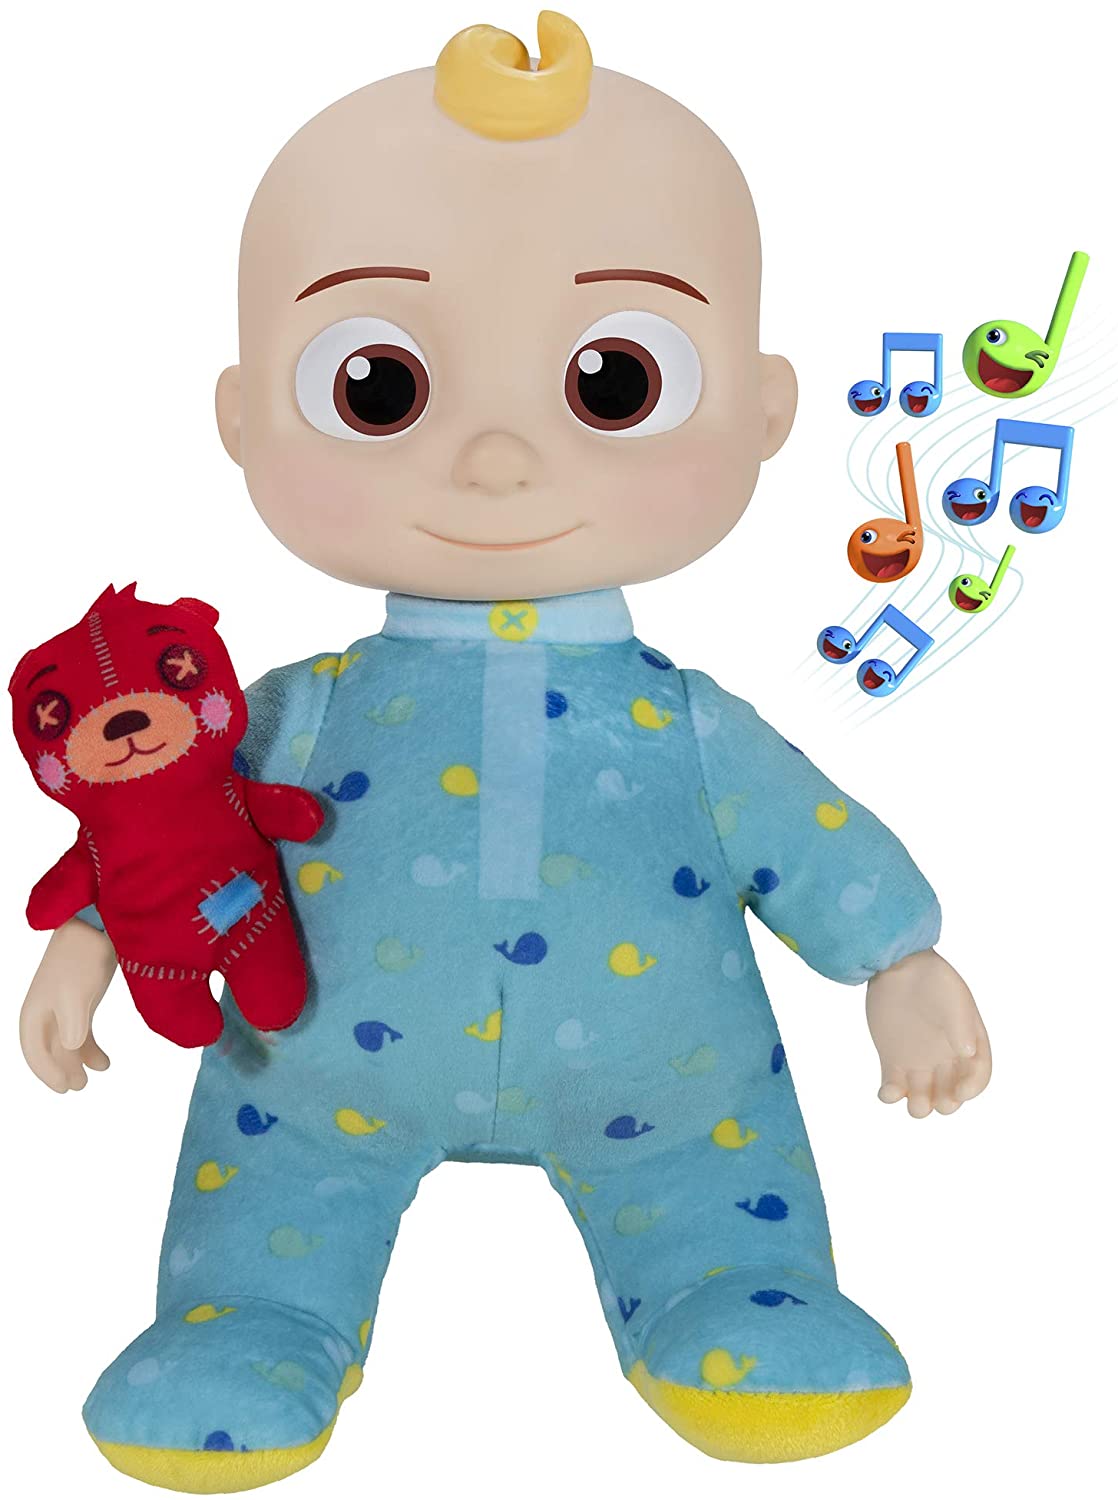 CoComelon Official Musical Bedtime JJ Doll, Soft Plush Body